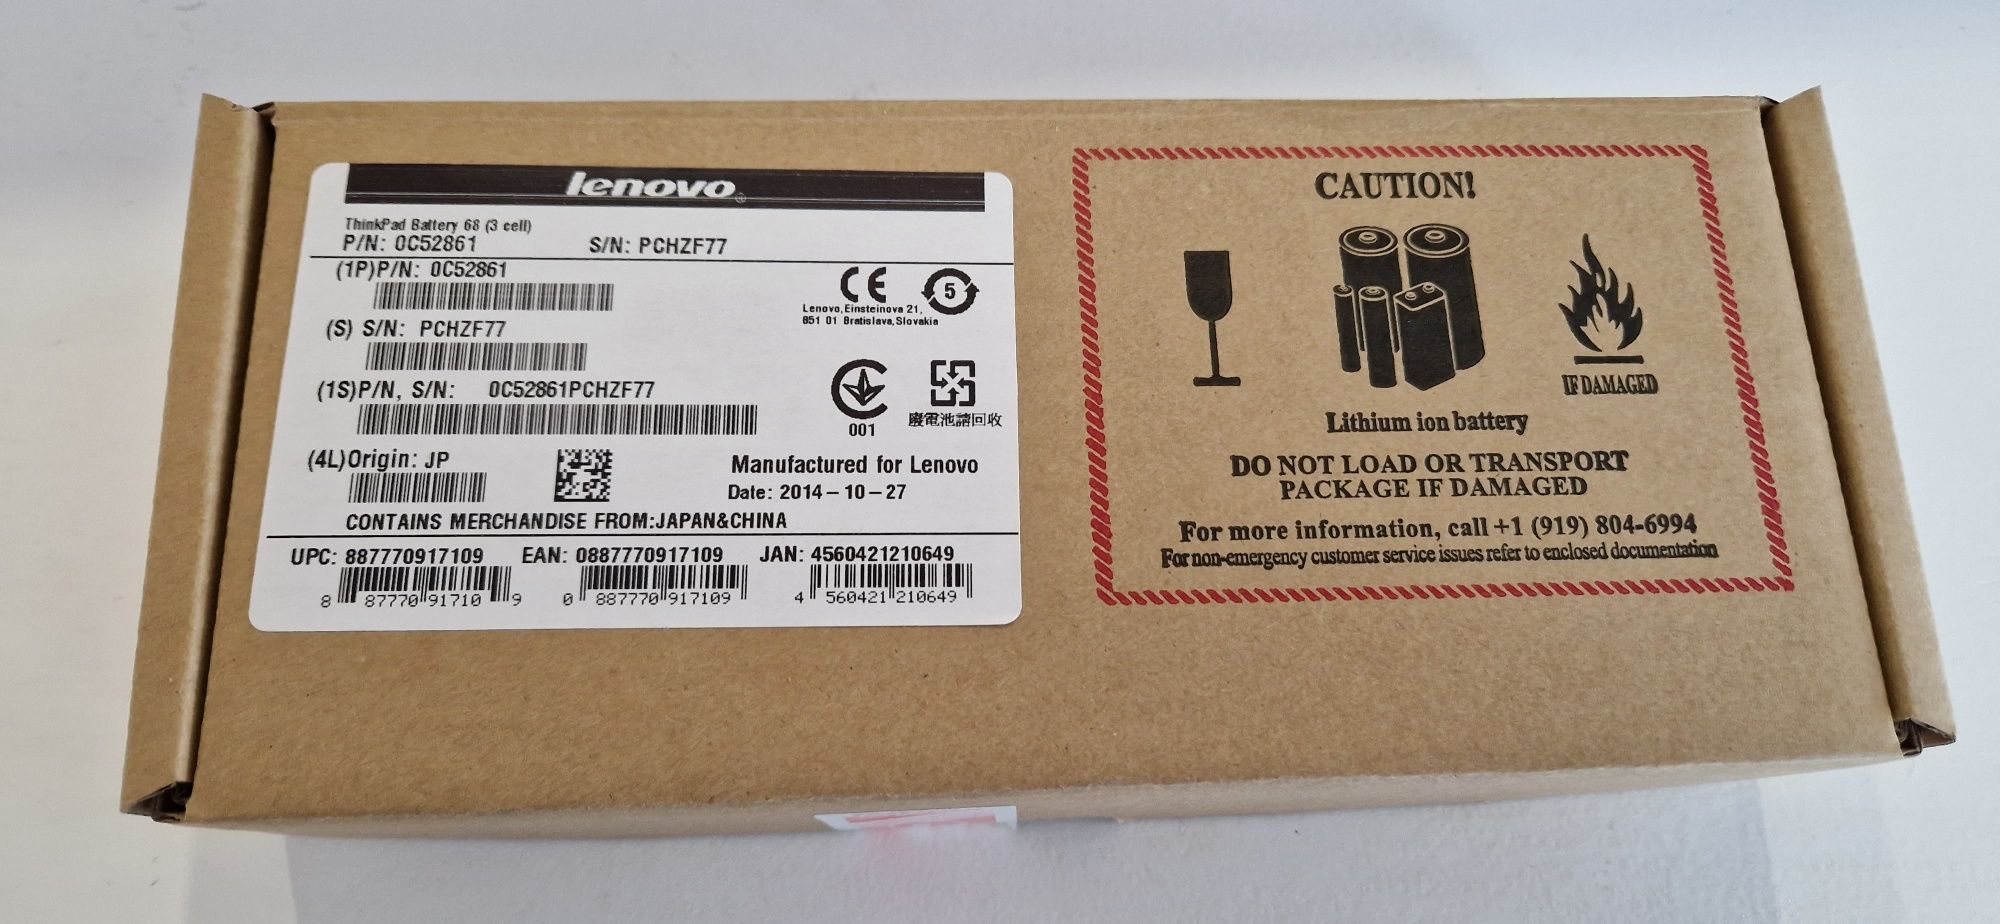 Vand Lenovo baterie acumulator laptop 0C52861 11.1V 2.09Ah 24Wh